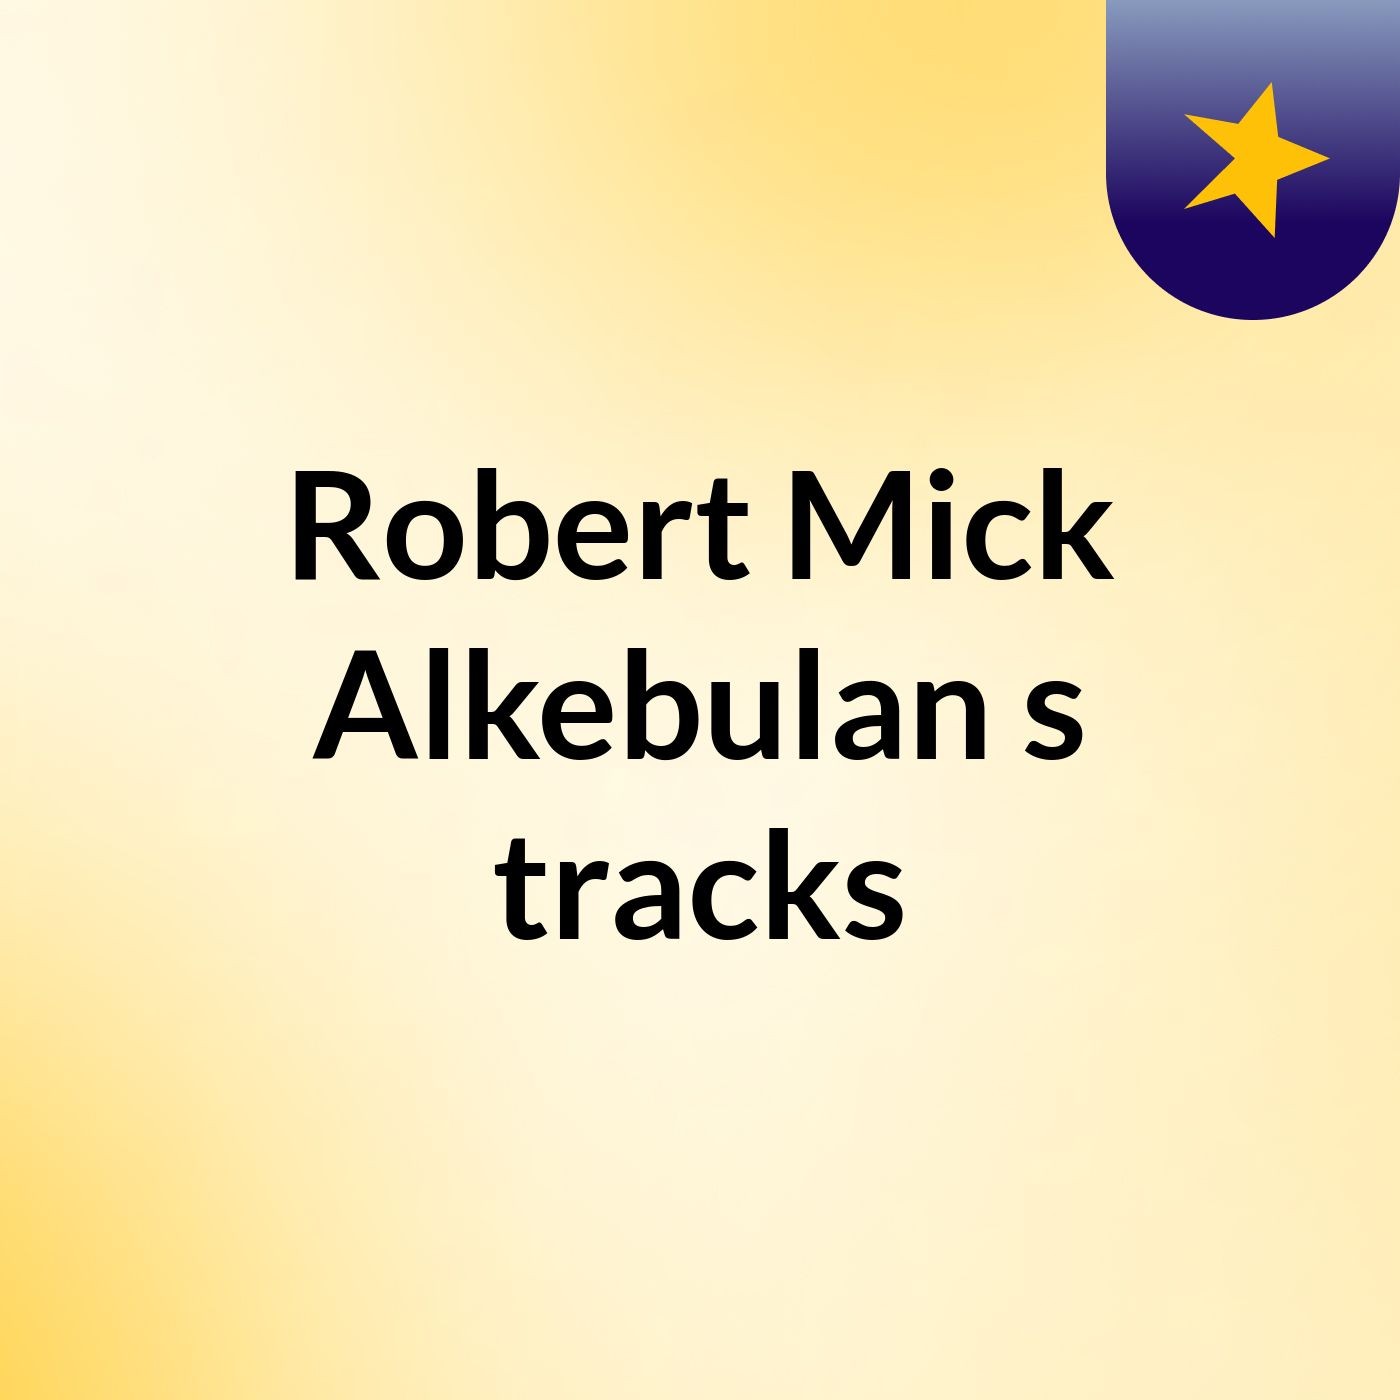 Robert Mick Alkebulan's tracks